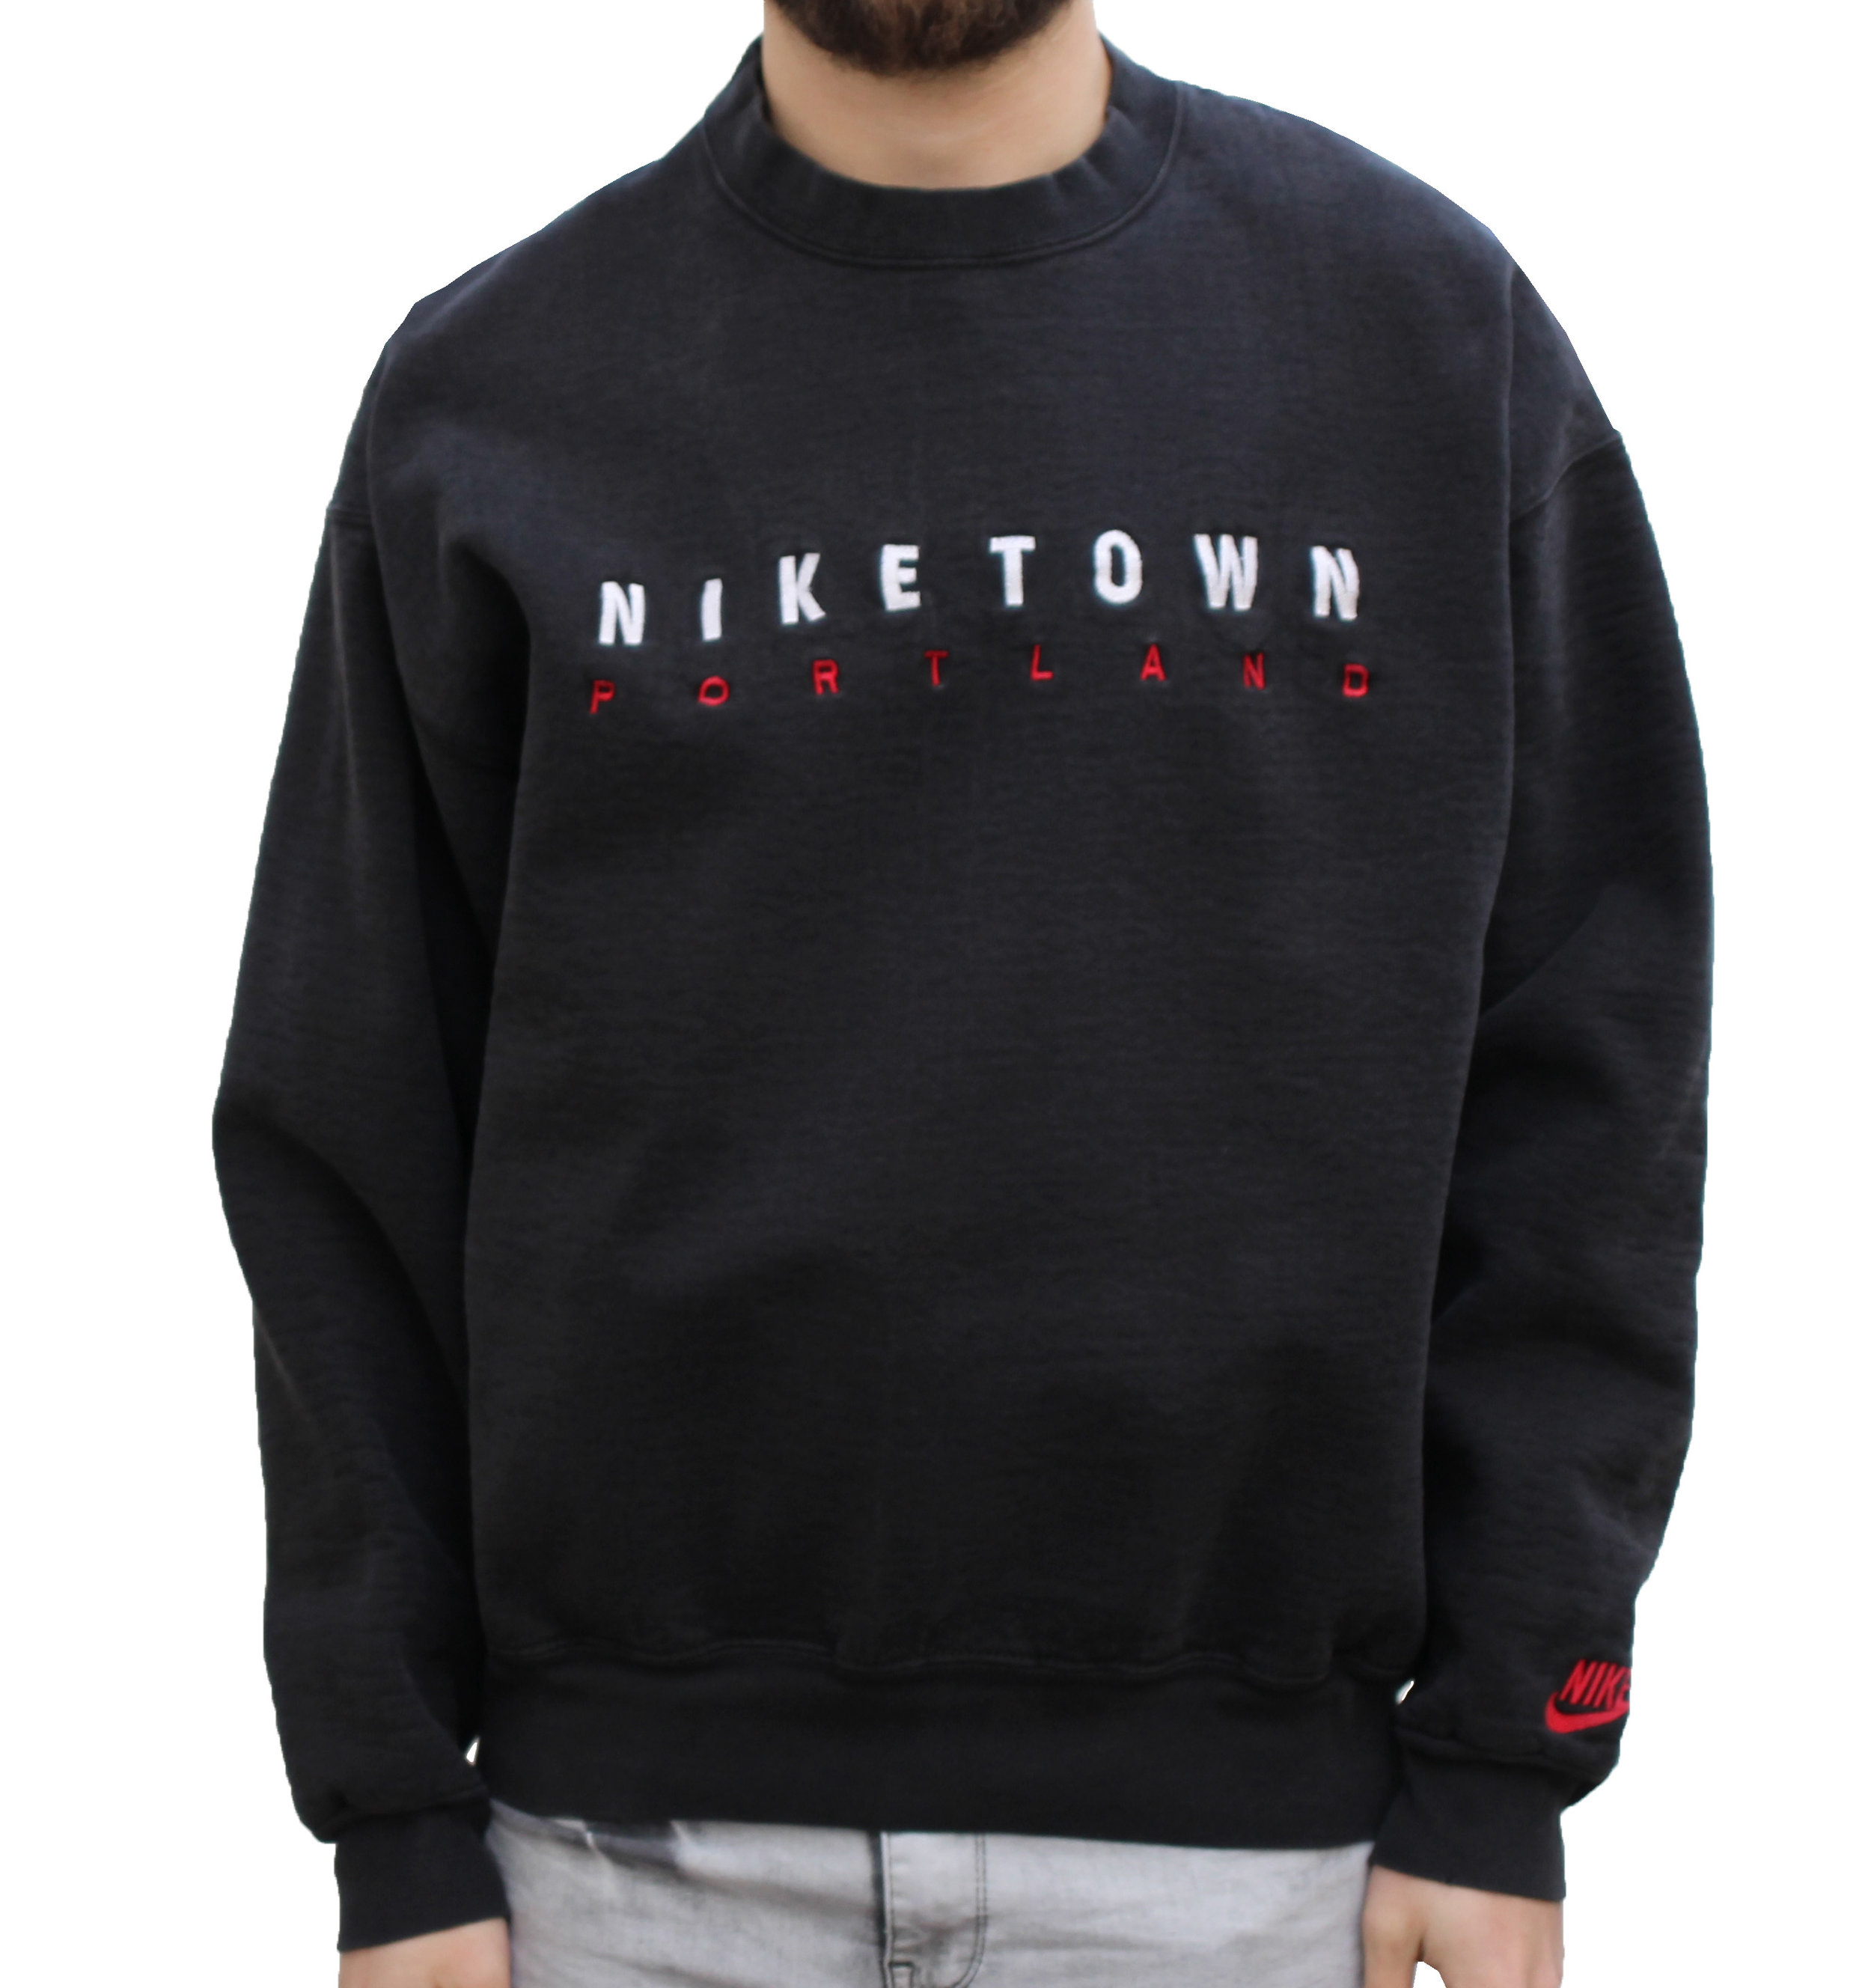 niketown sweatshirt